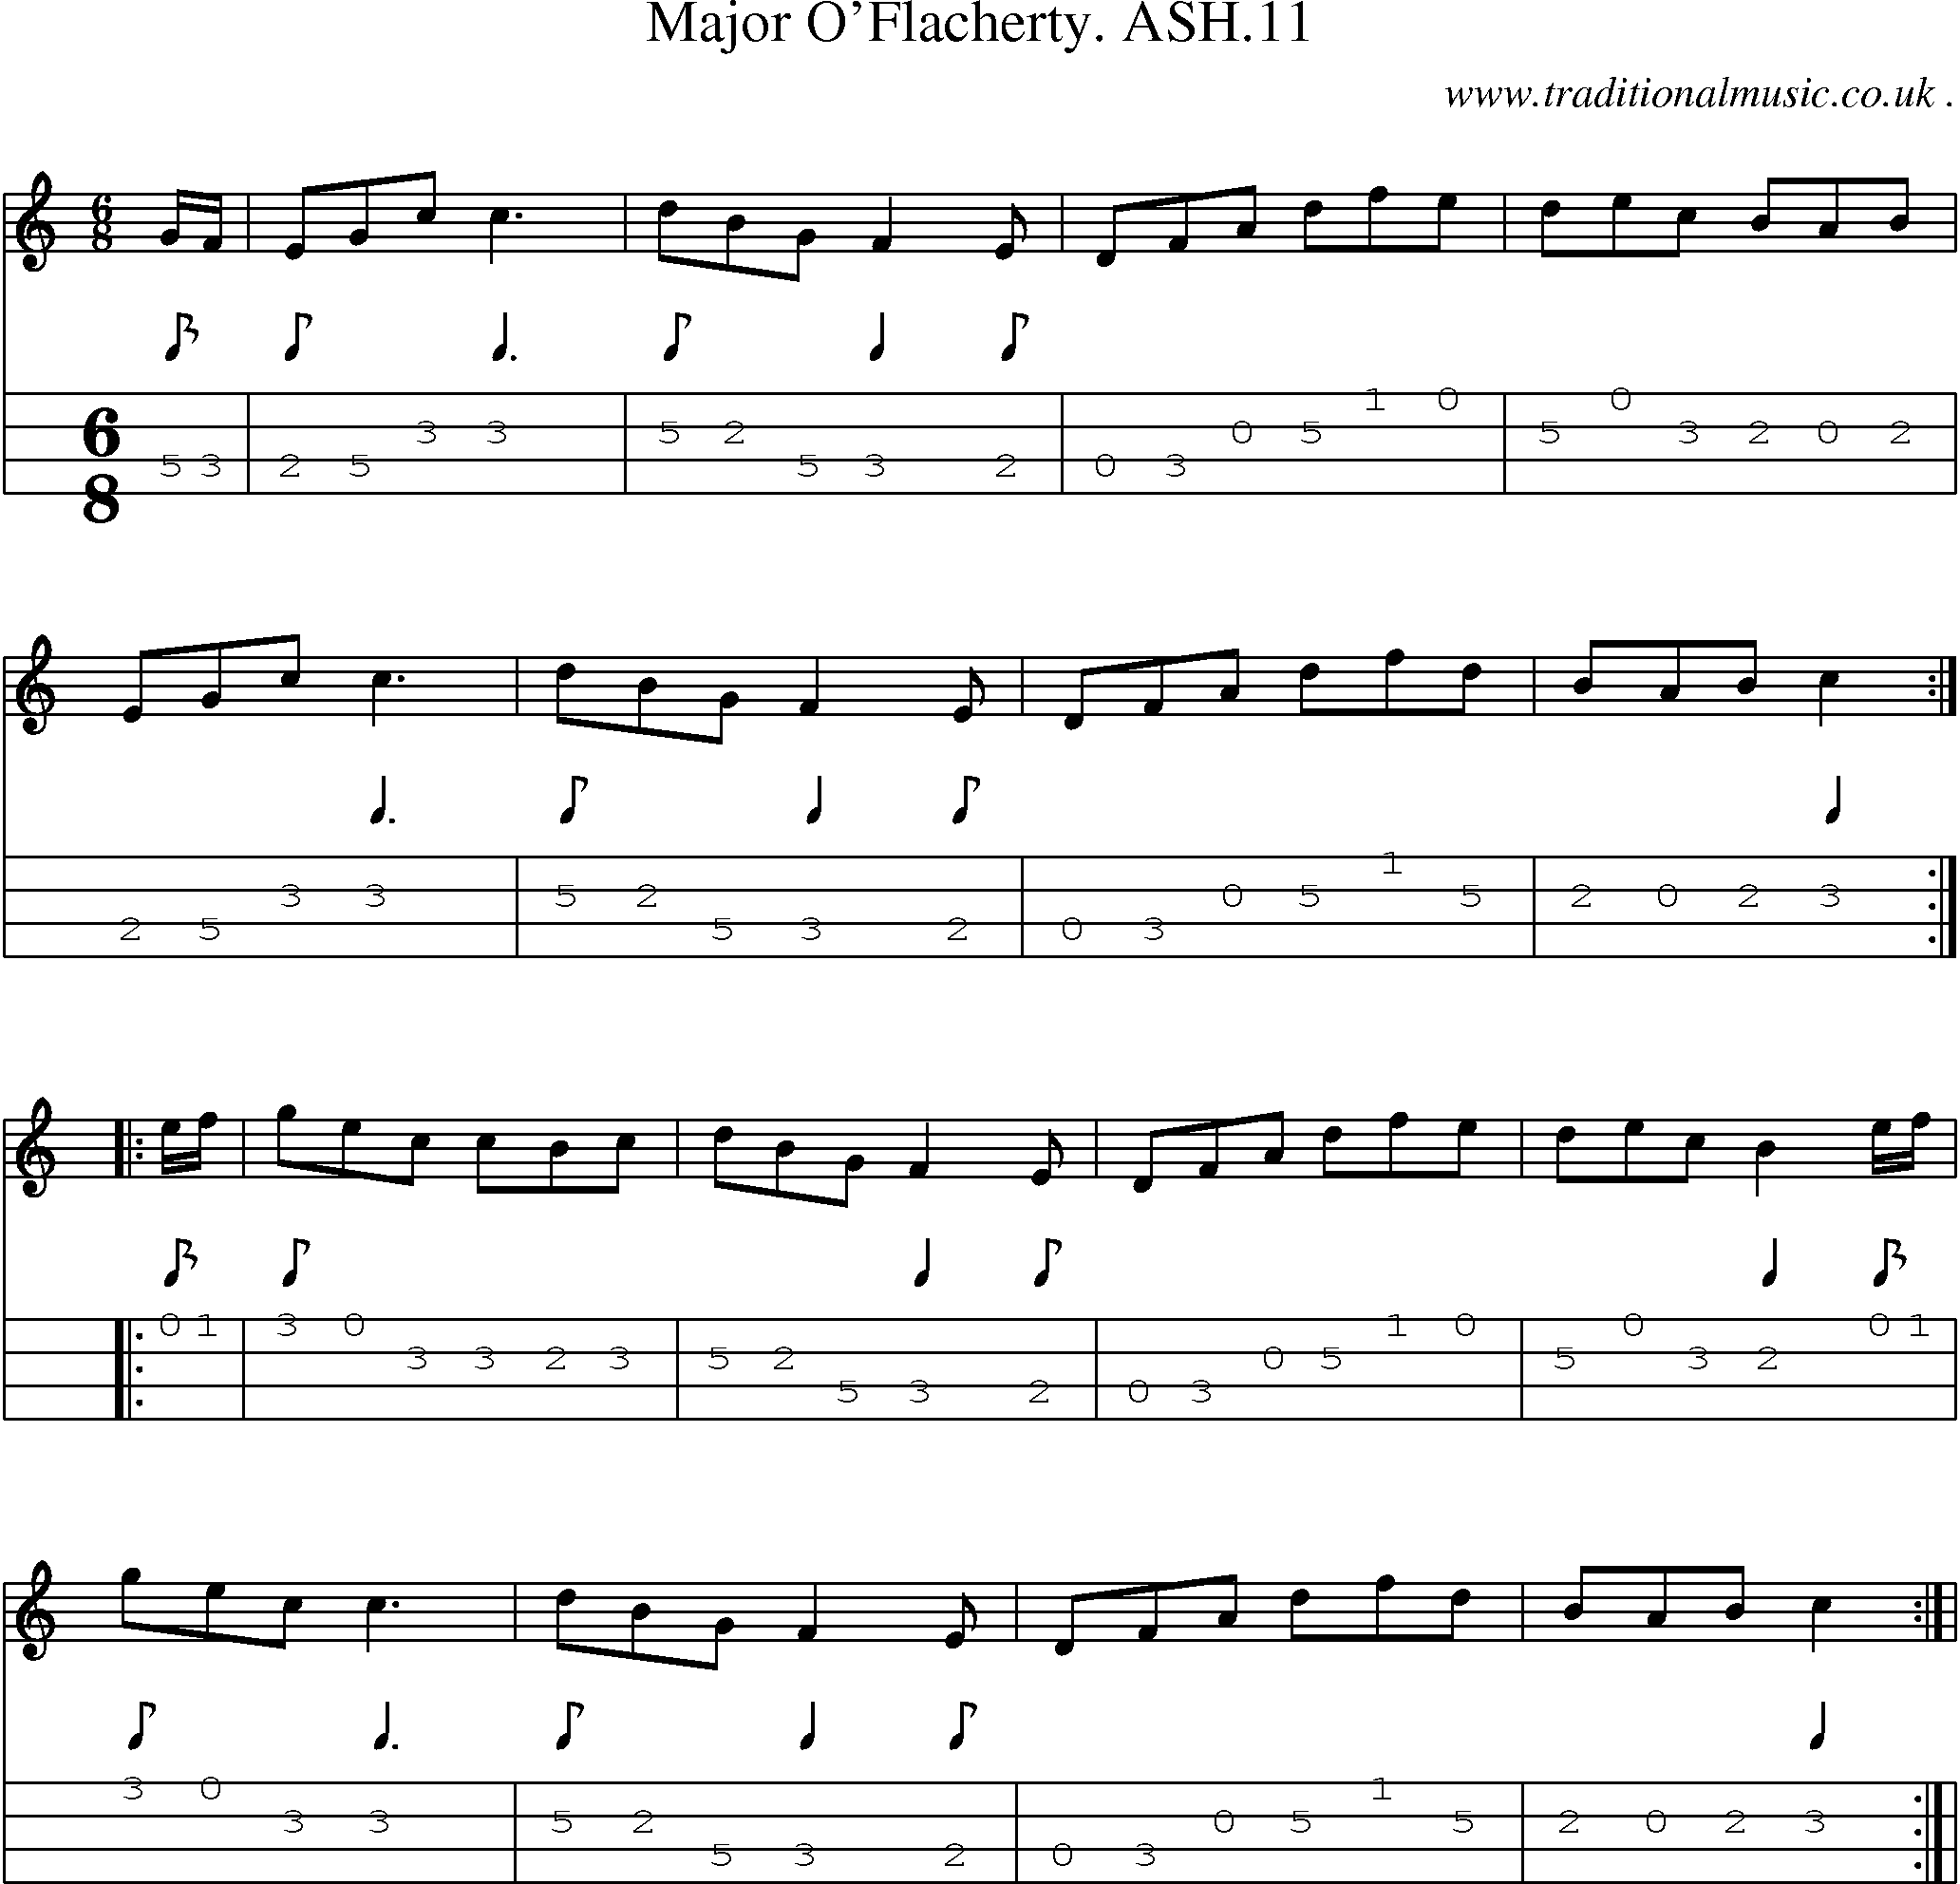 Sheet-Music and Mandolin Tabs for Major Oflacherty Ash11